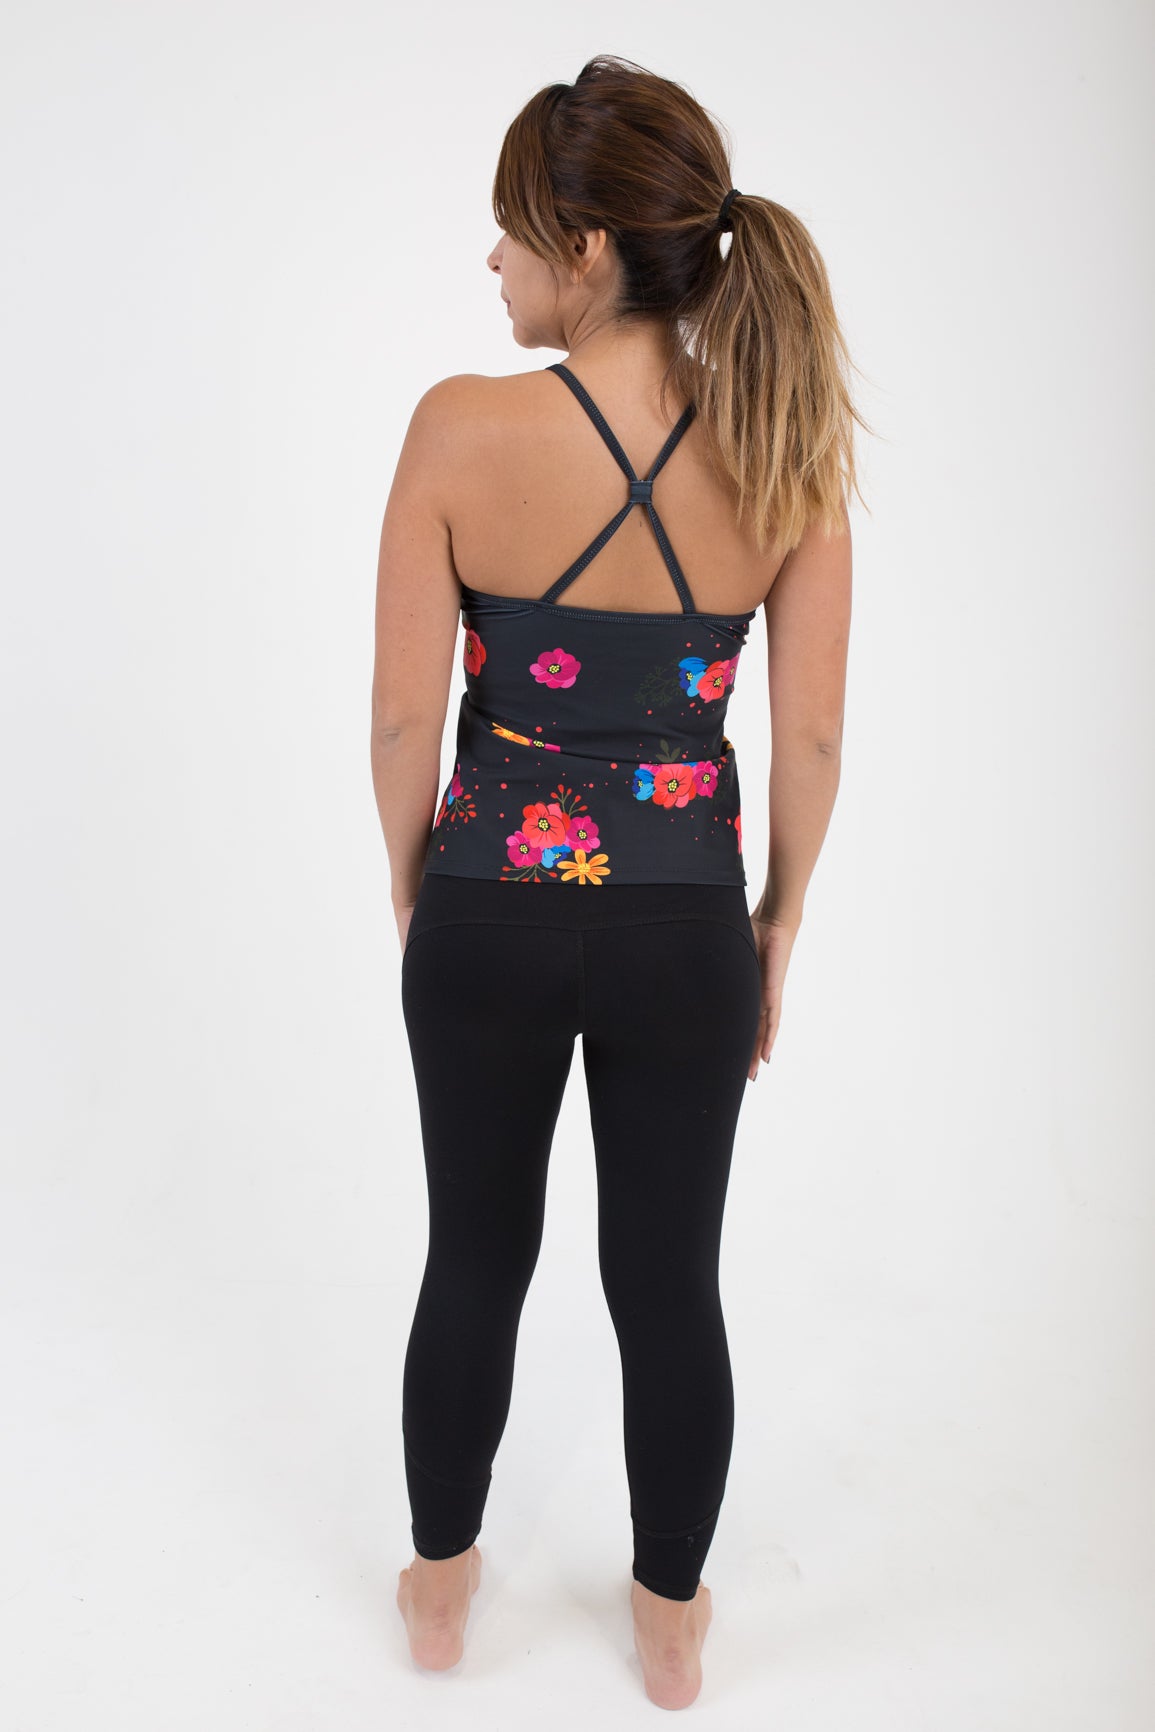 Daisy Set (top & leggings) – Octopia Clothing